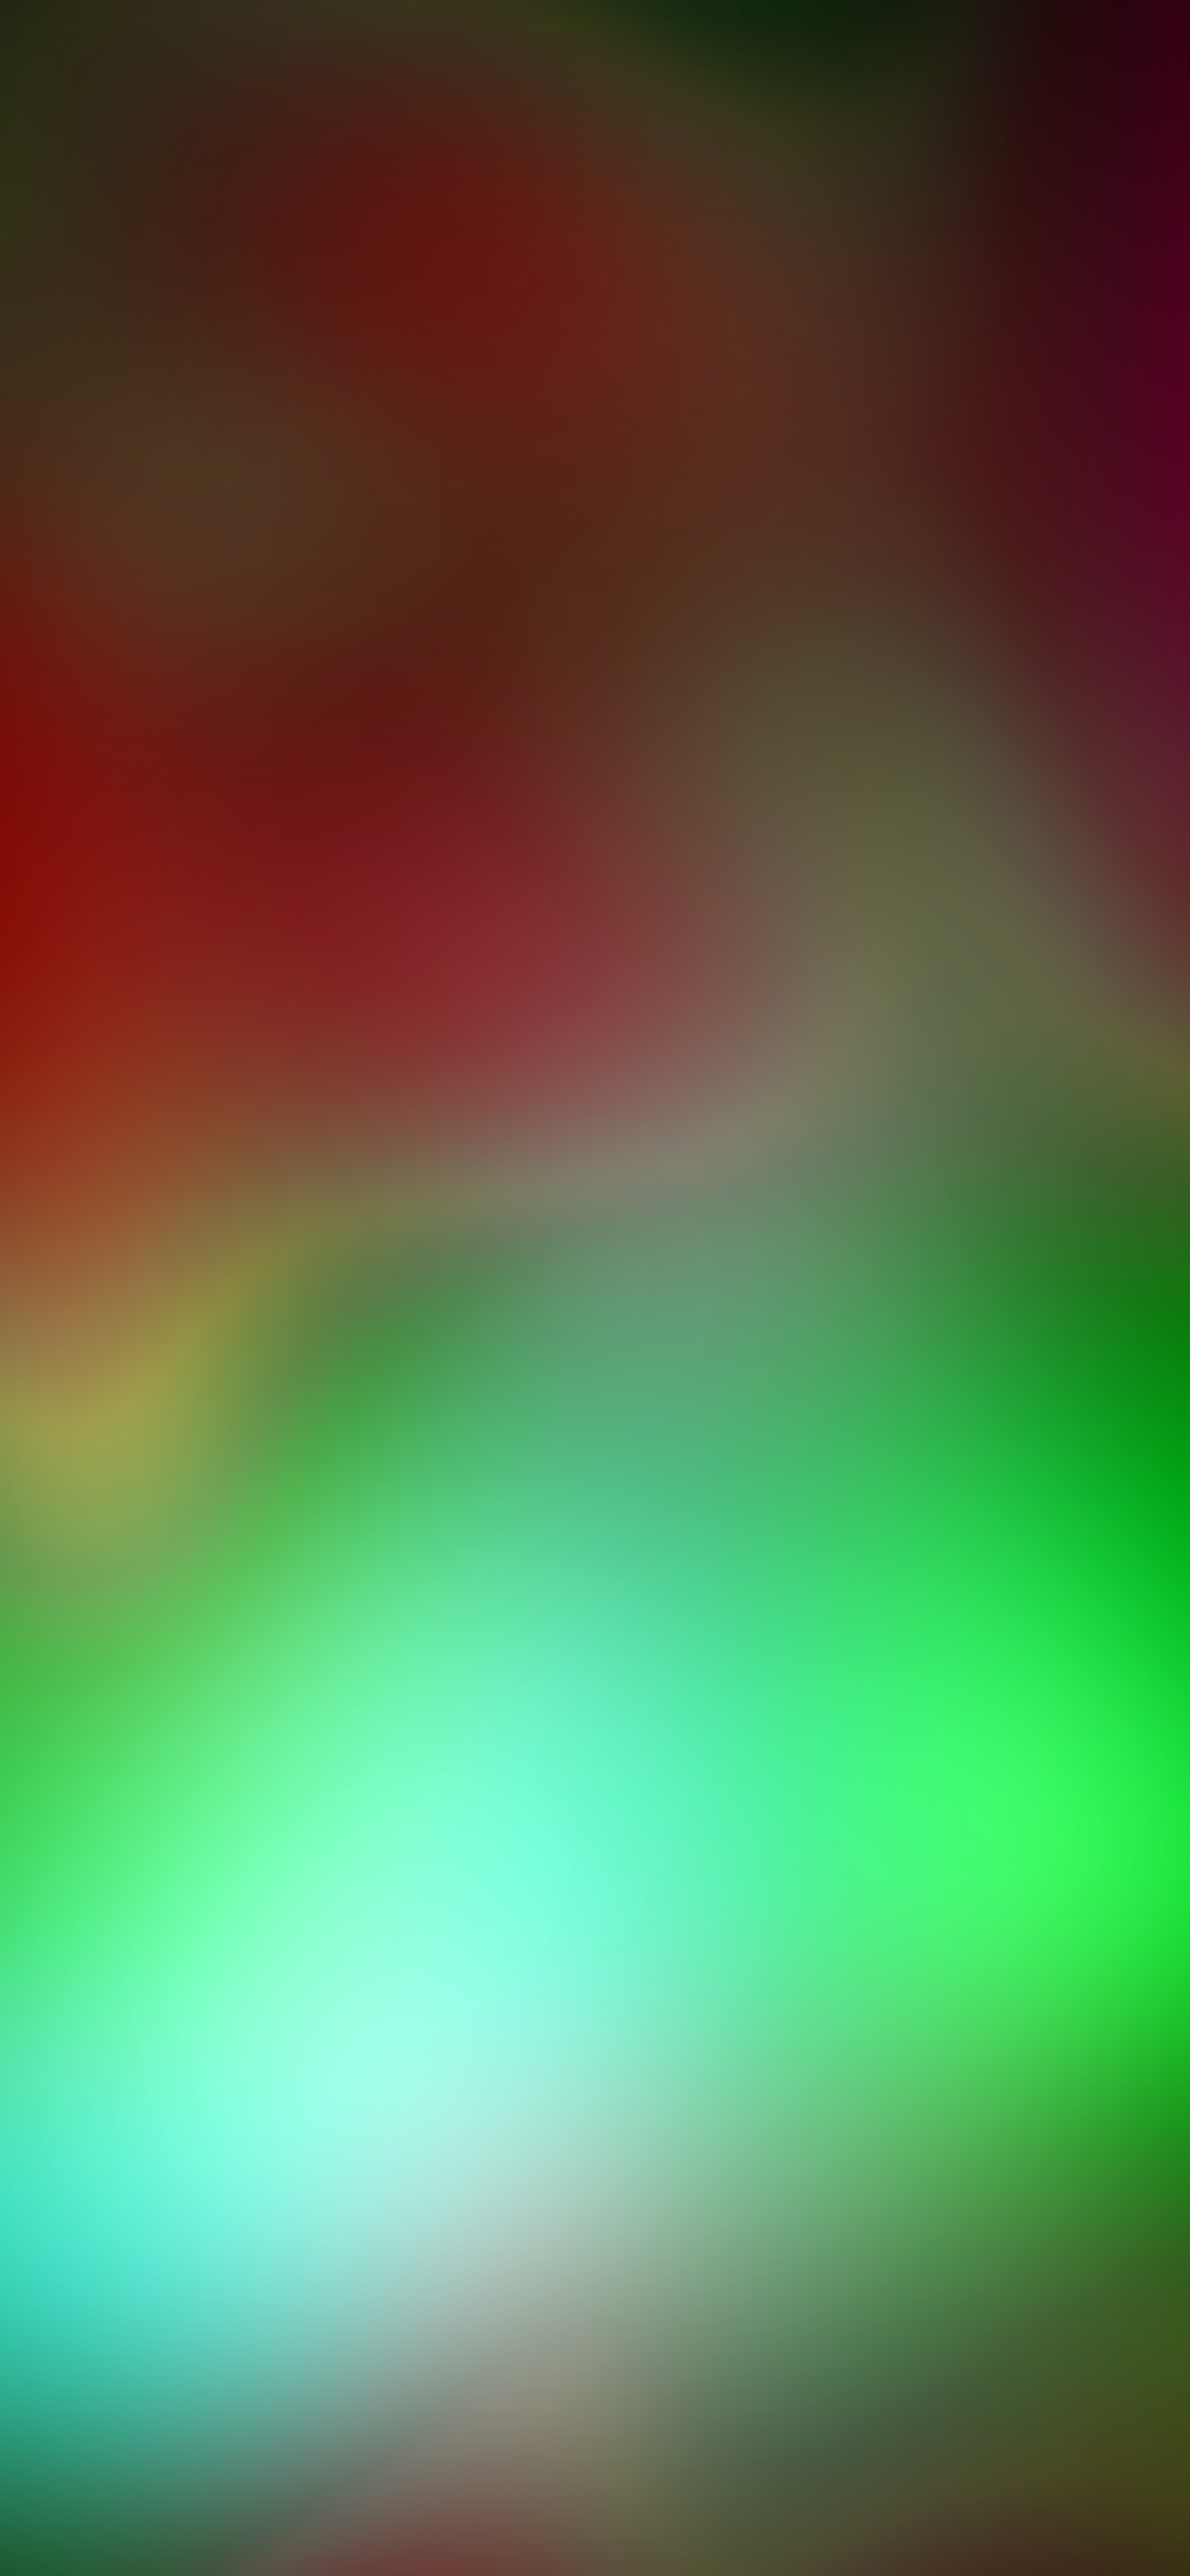 General 2250x4872 iPod iPhone iPad iOS colorful vertical portrait display